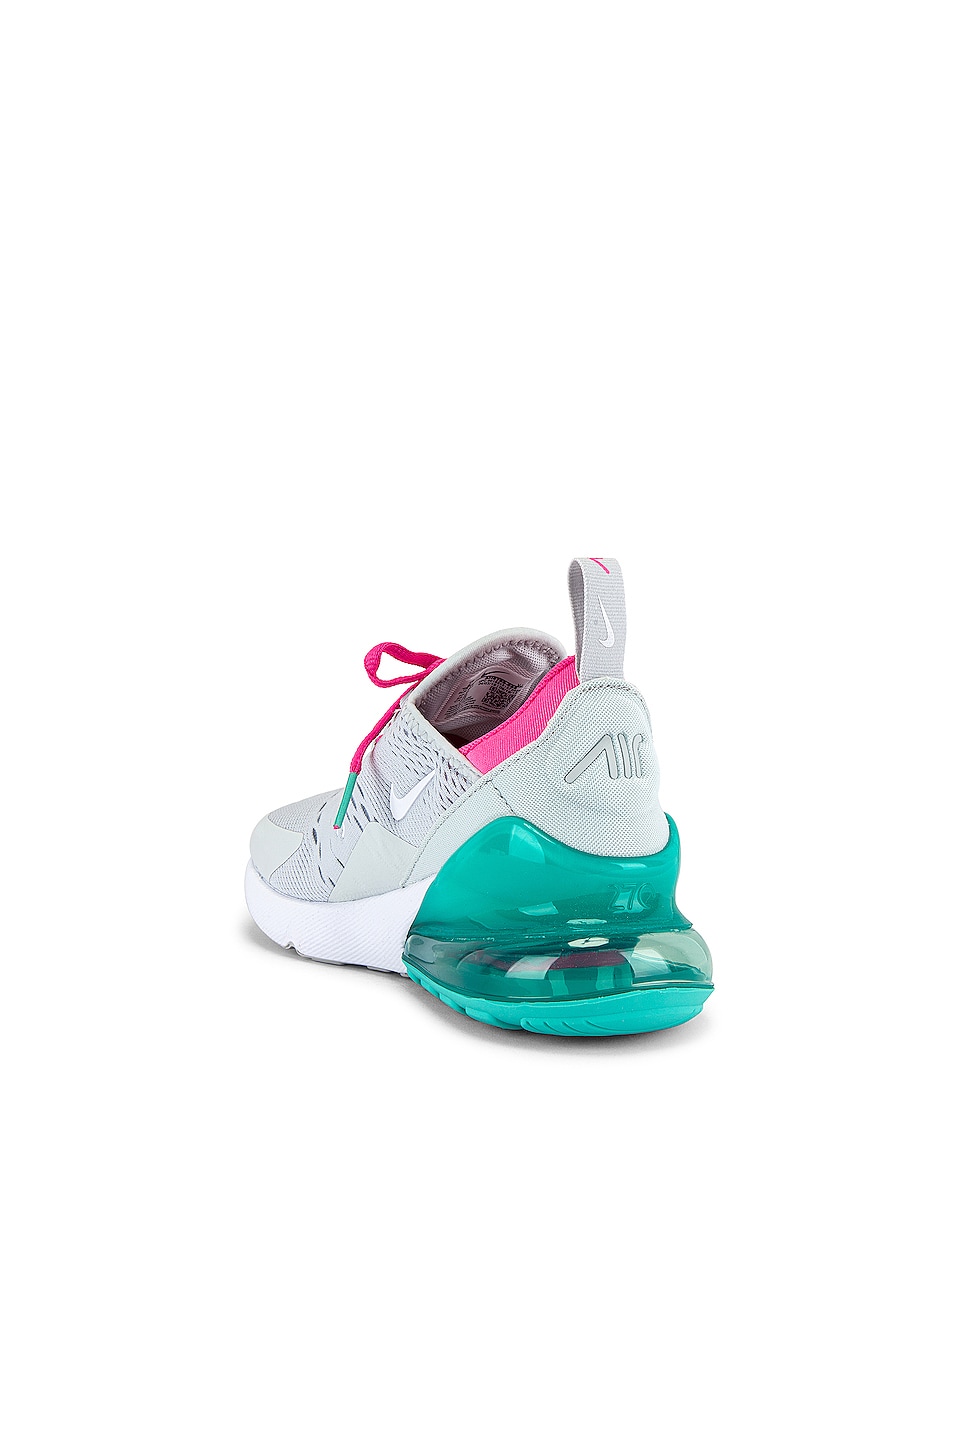 Nike Air Max 270 Sneaker In Pure Platinum White Pink Blast And Aurora